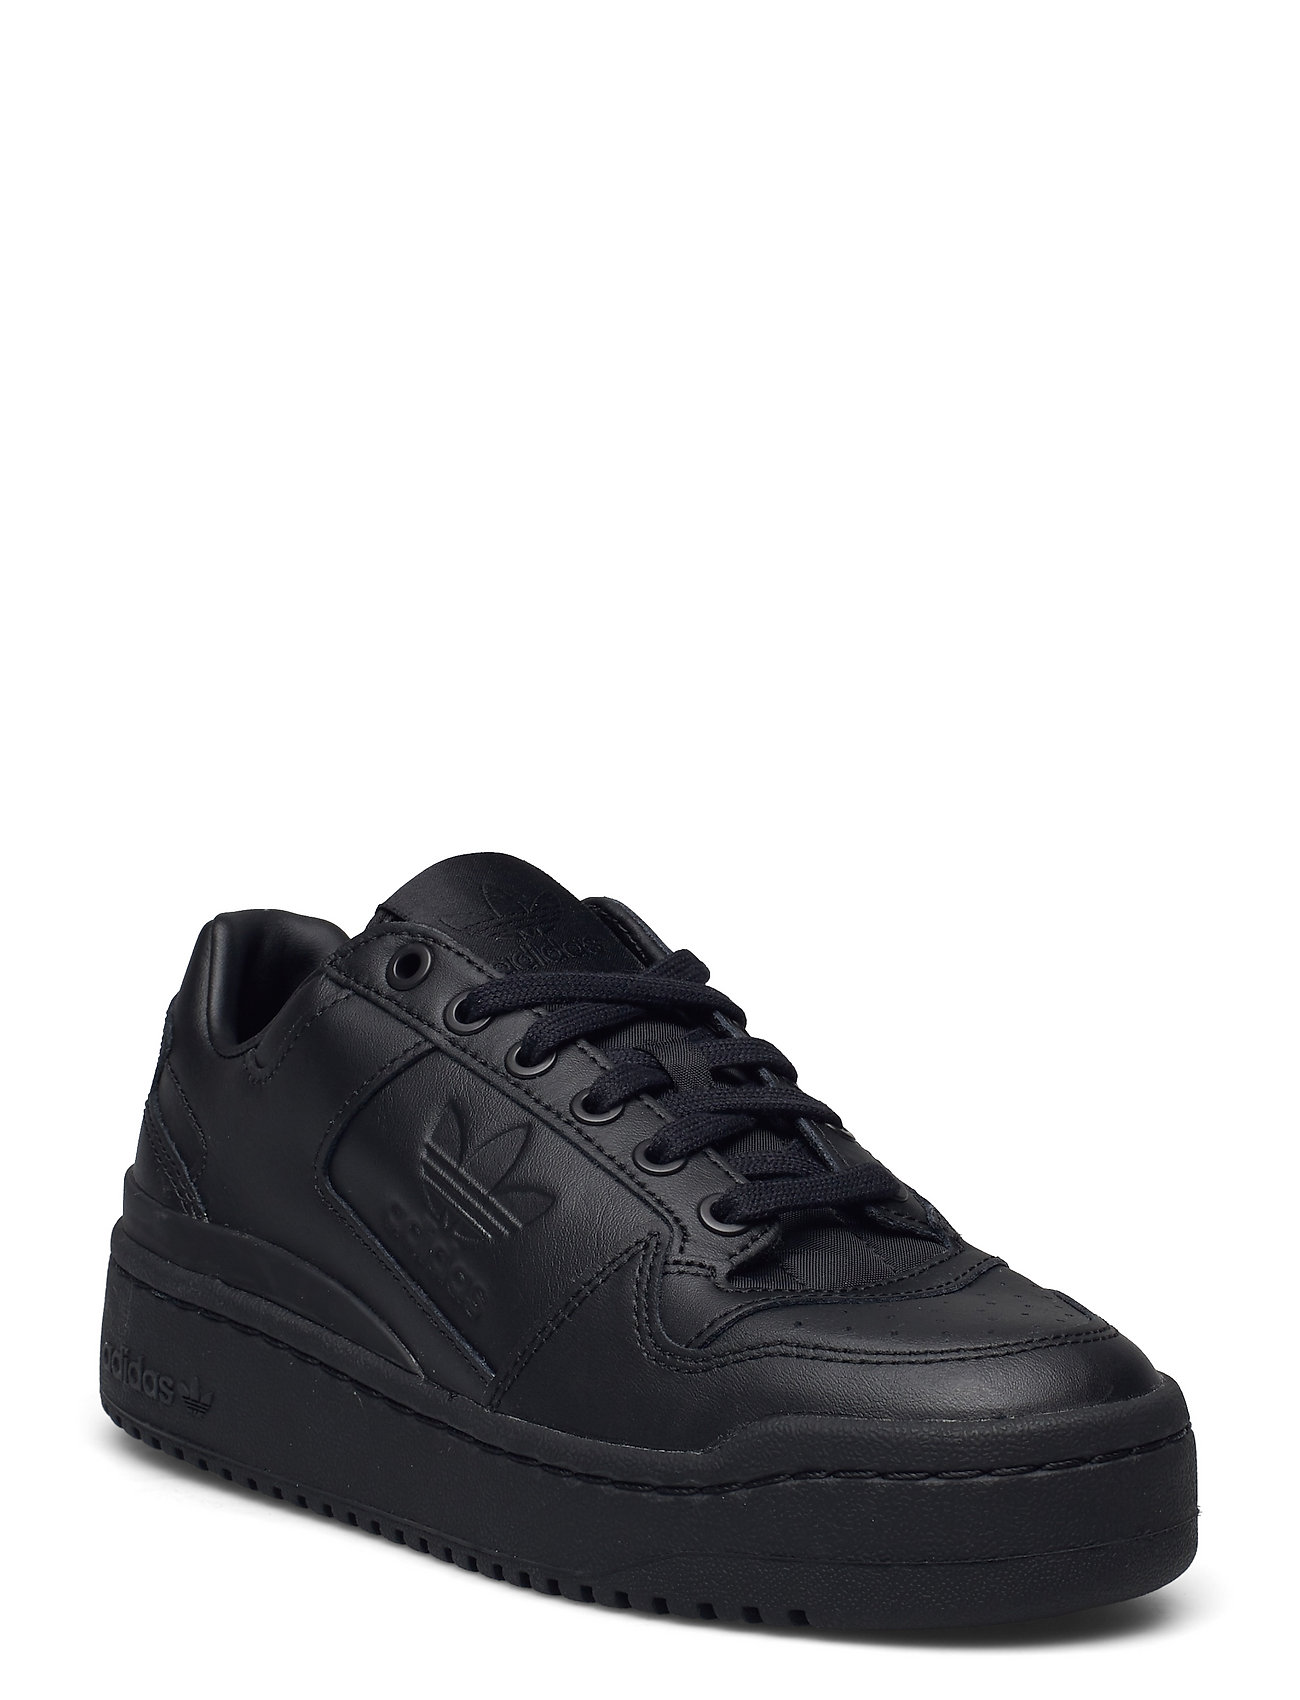 Forum Bold Shoes Low-top Sneakers Black Adidas Originals